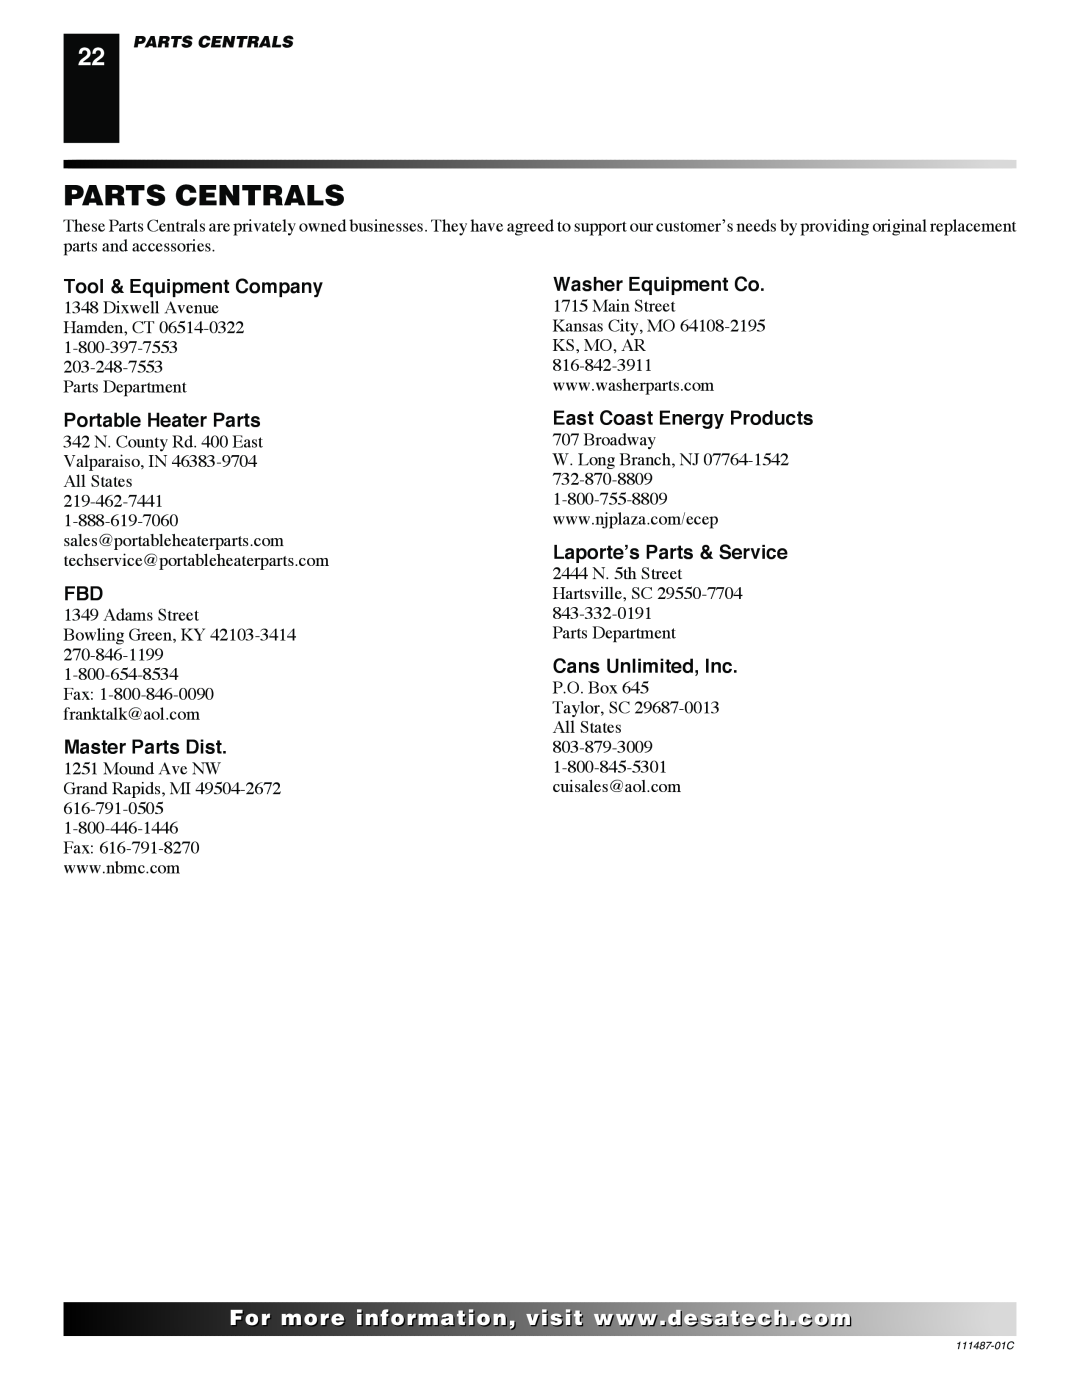 Desa CSBNT, CSPIPT Parts Centrals, For..com, Tool & Equipment Company, Portable Heater Parts, Laporte’s Parts & Service 